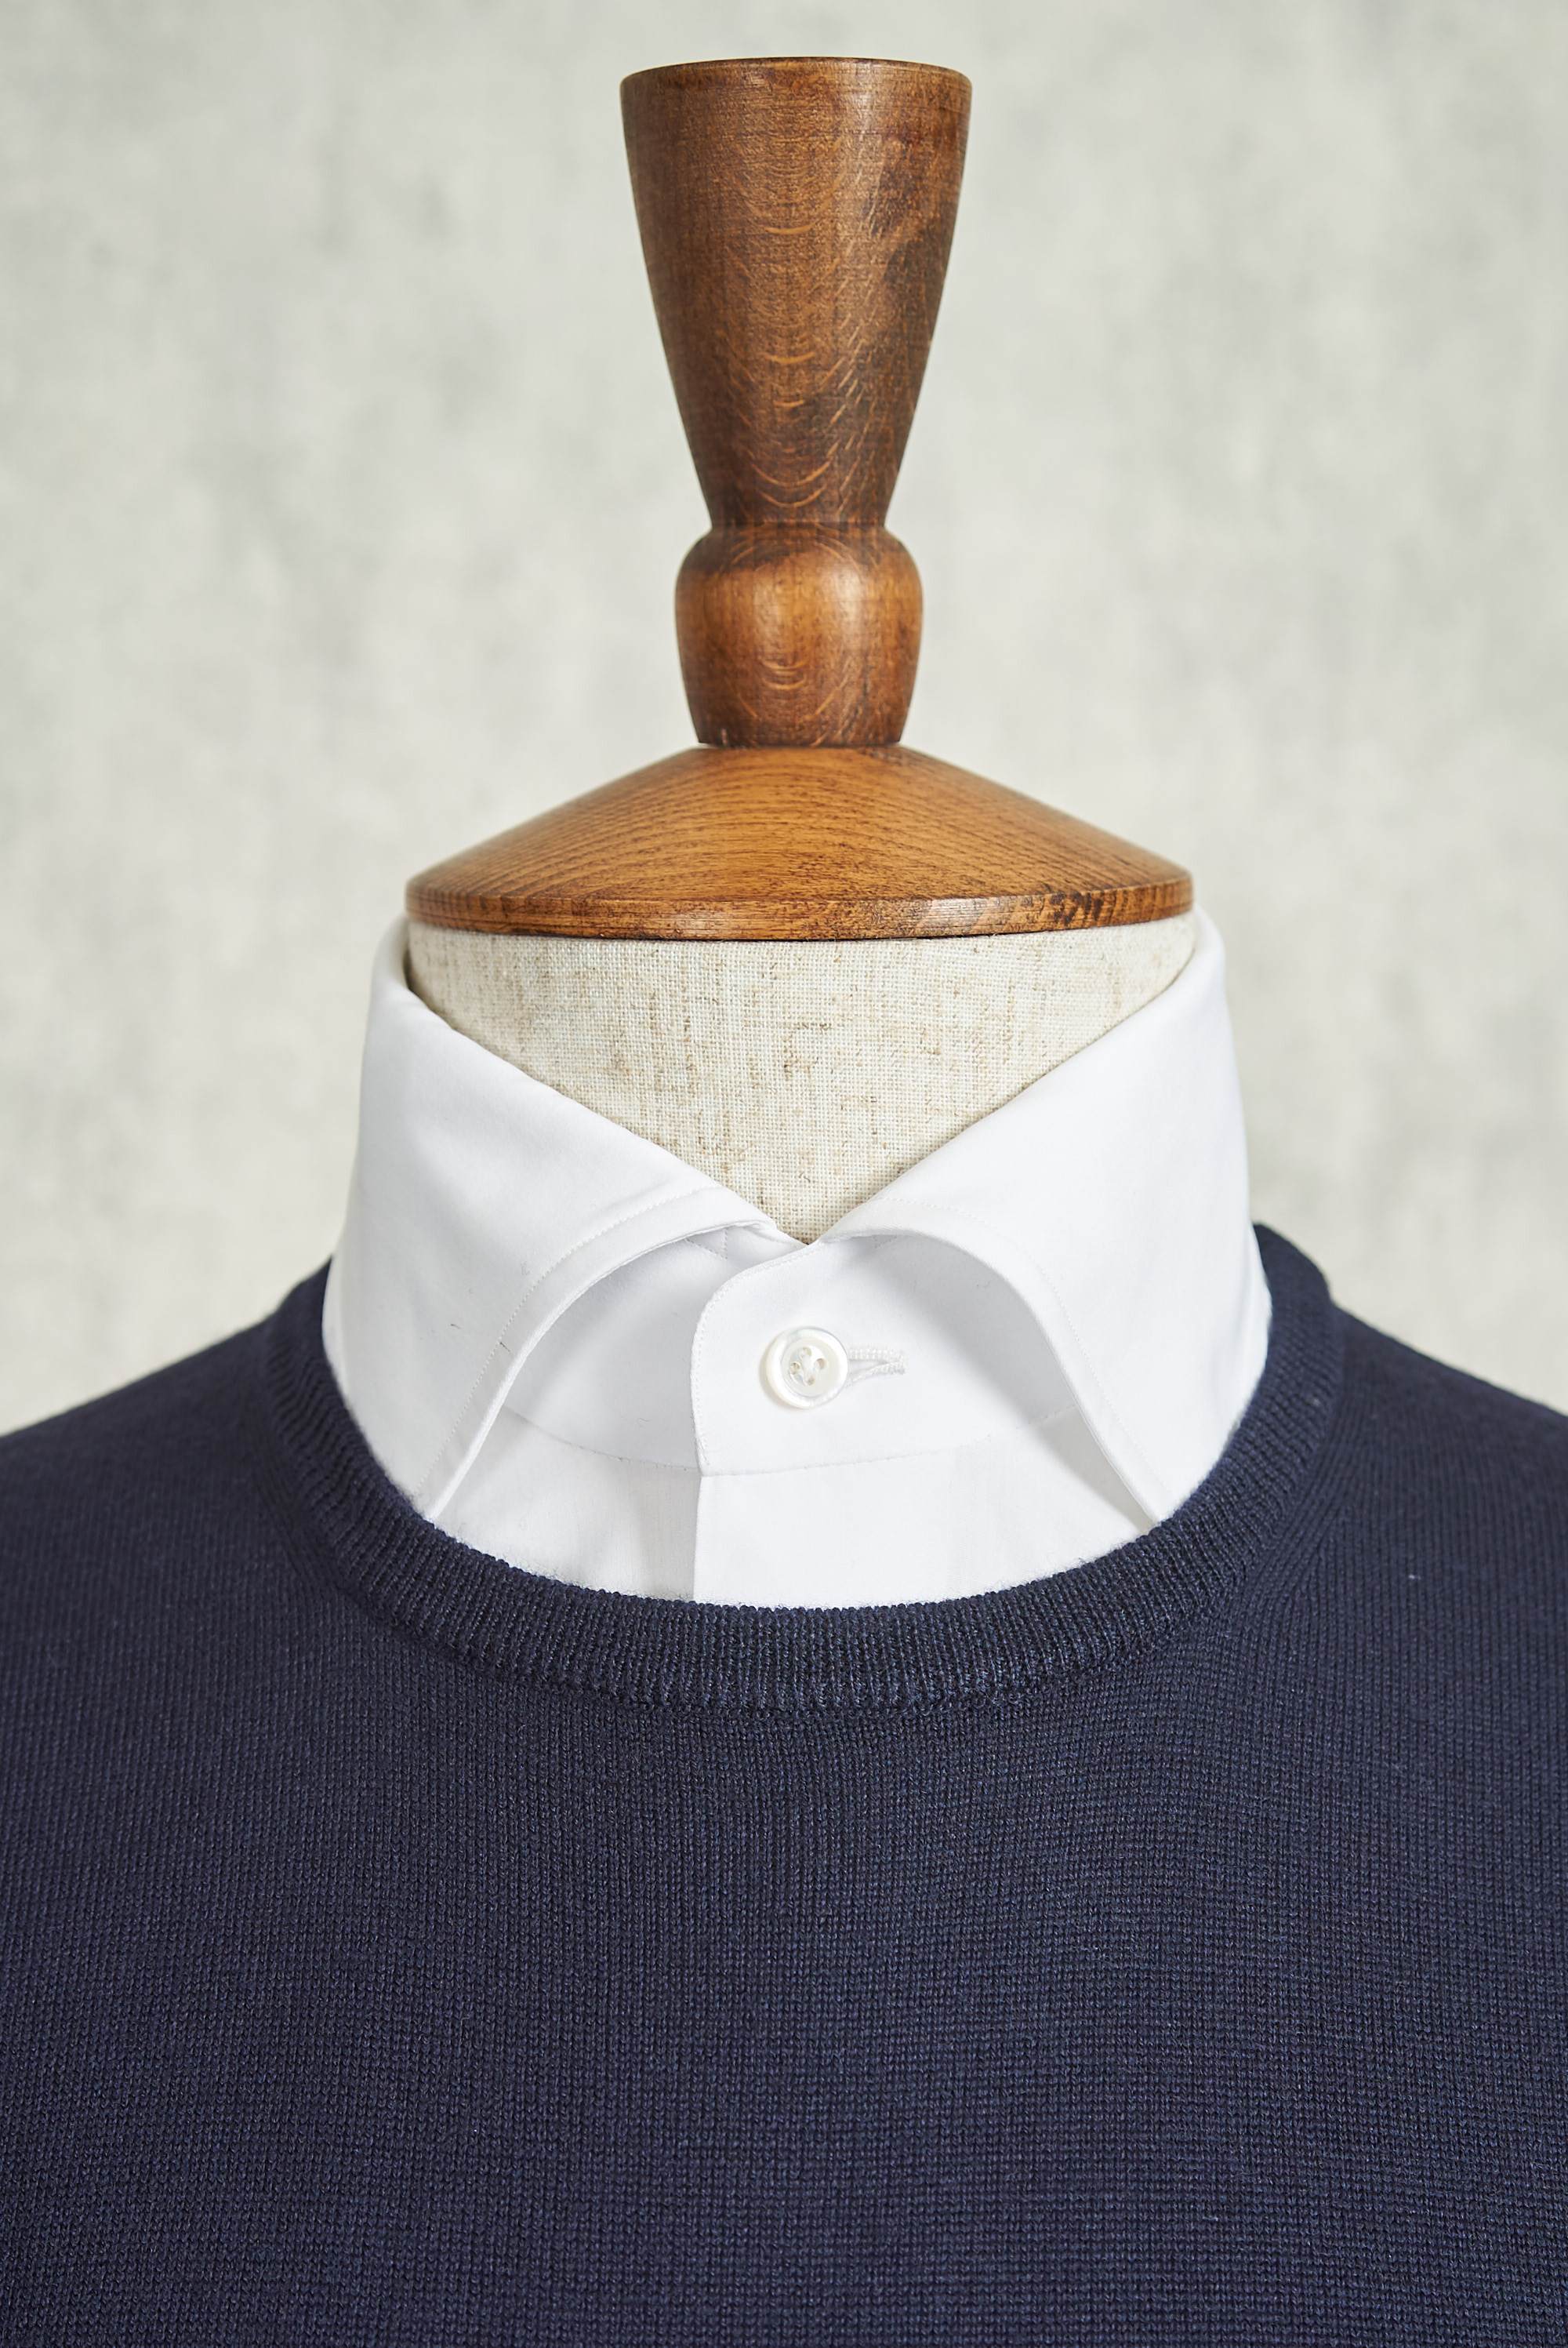 Ascot Chang Navy Extra-Fine Merino Wool Round Neck Sweater